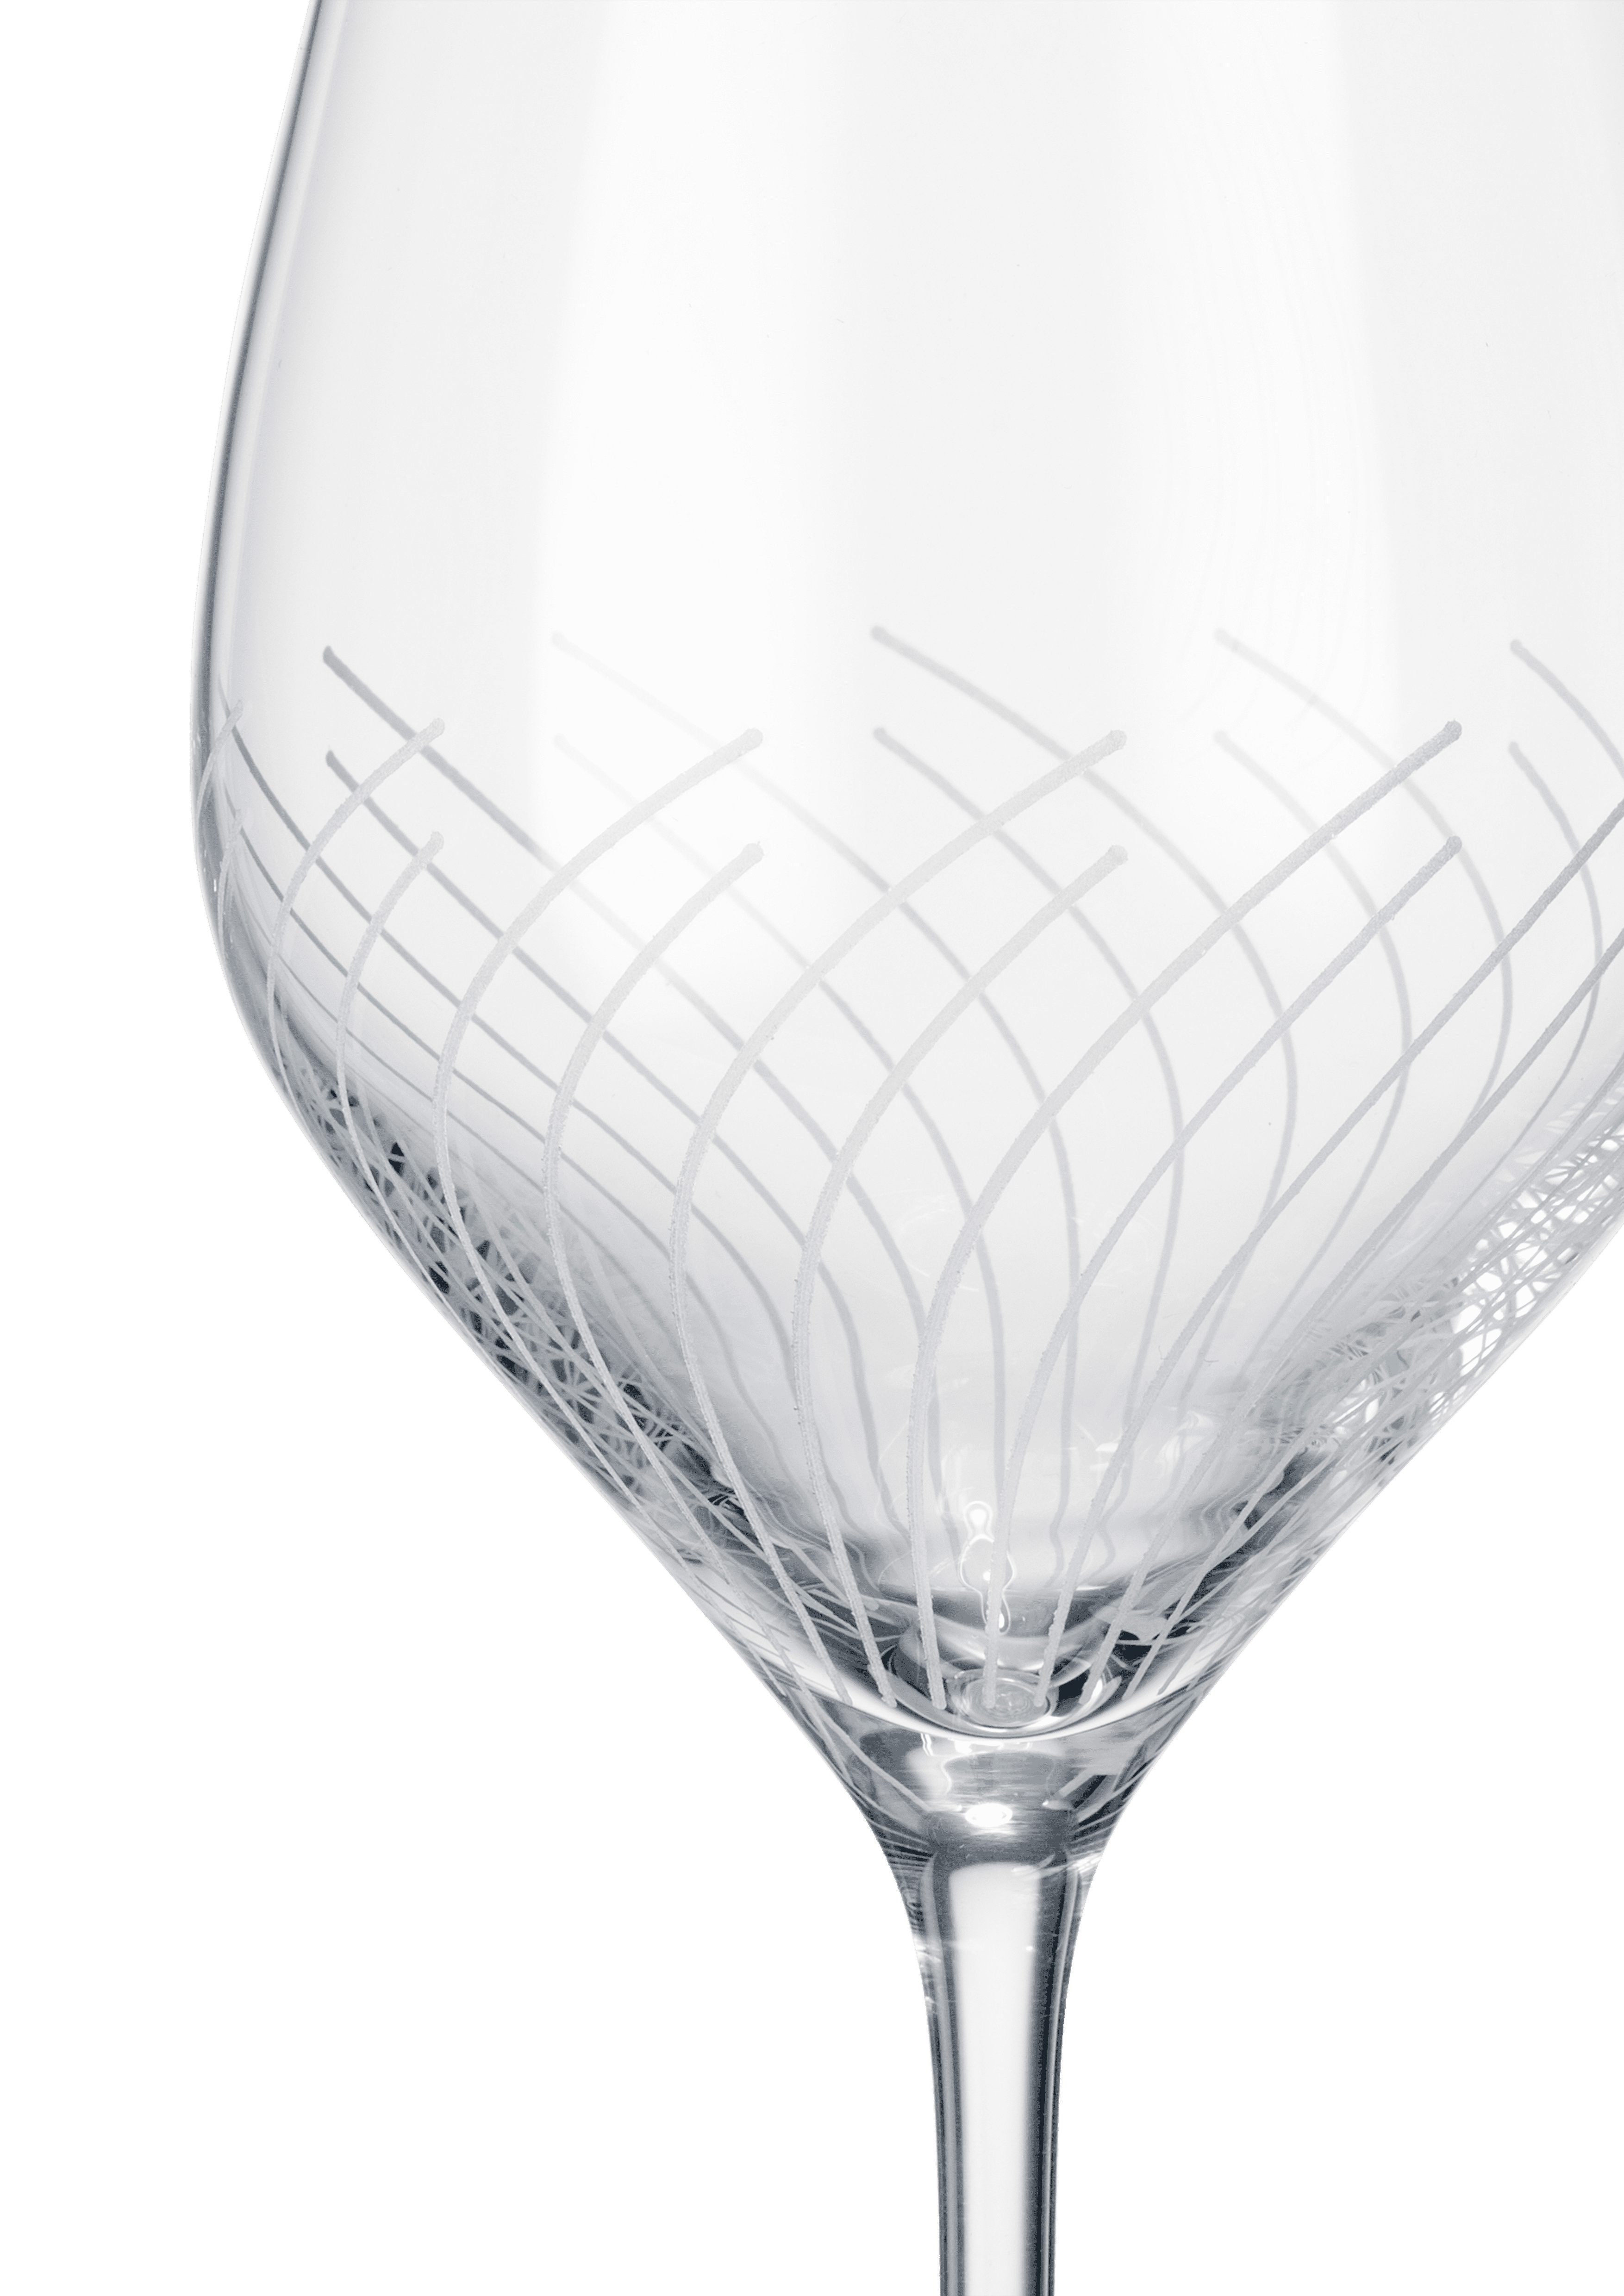 Weißweinglas 36 cl 2 Stck.